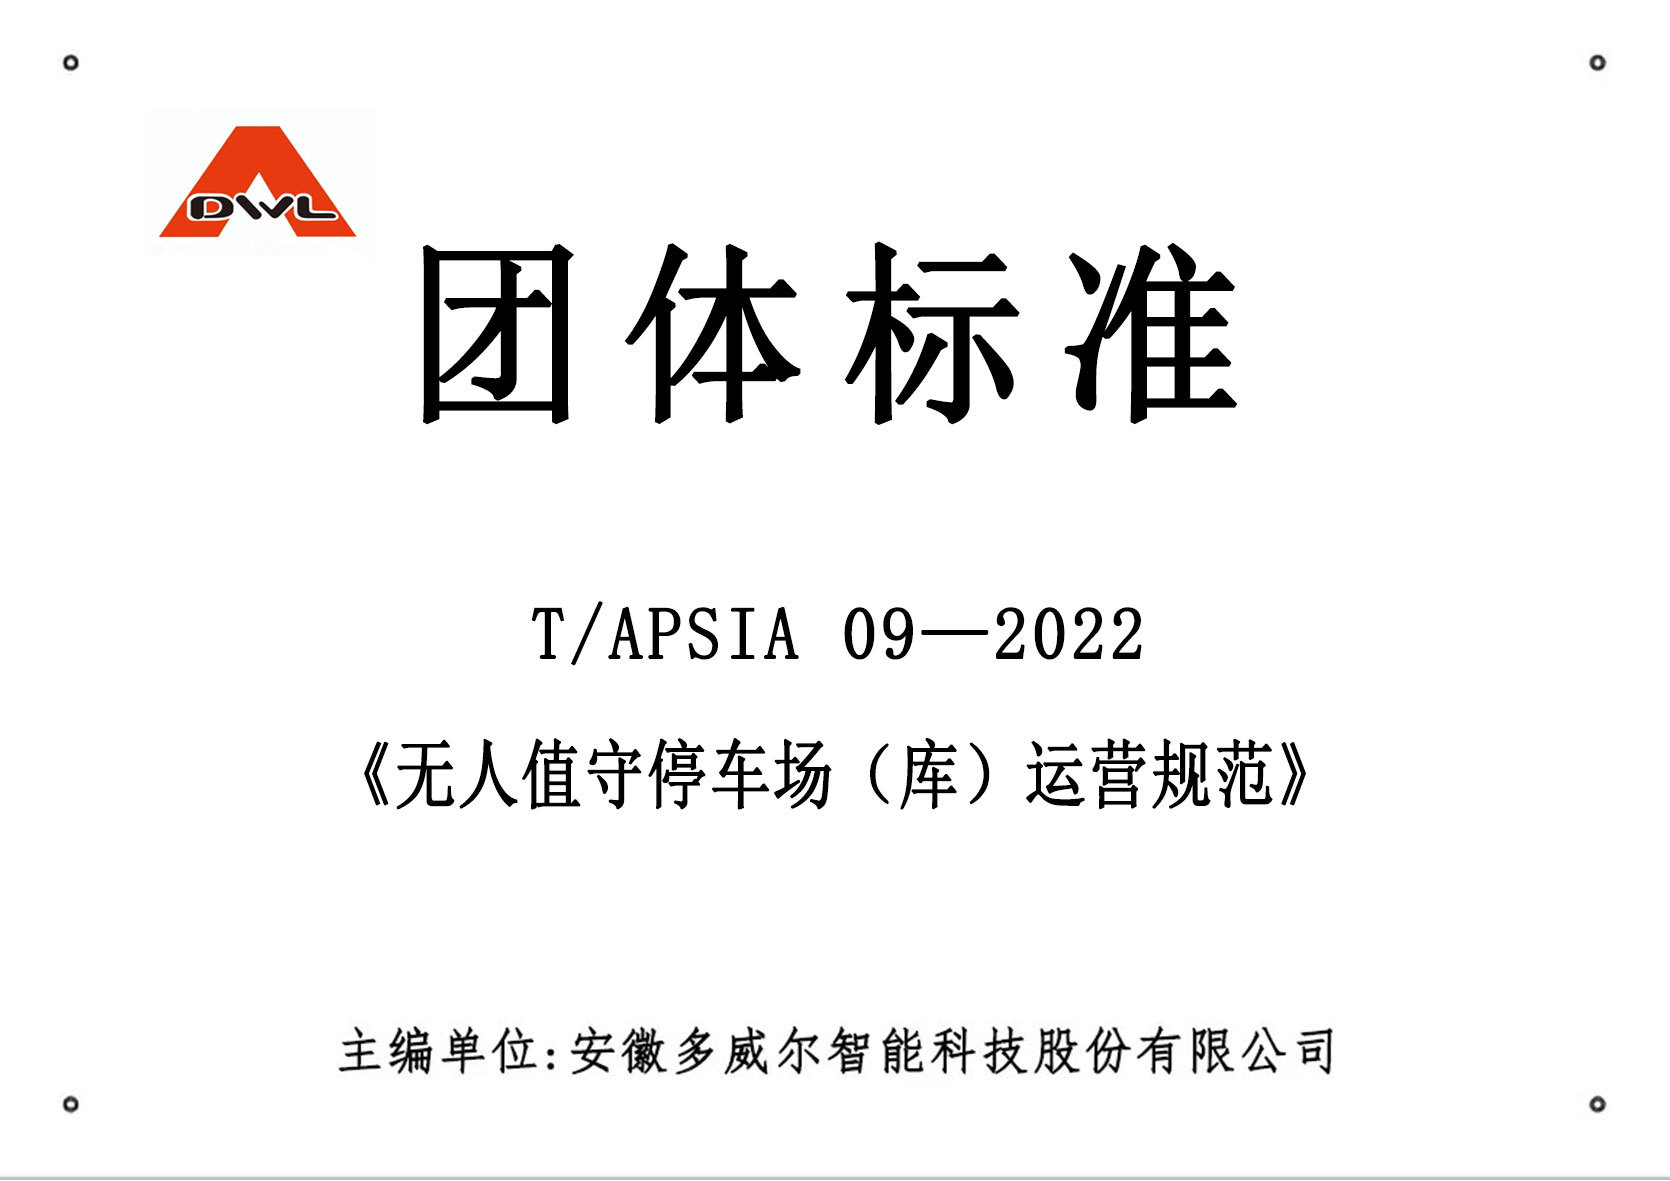 T/APSIA 09—2022《无人值守停车场（库）运营规范》团体标准正式发布实施